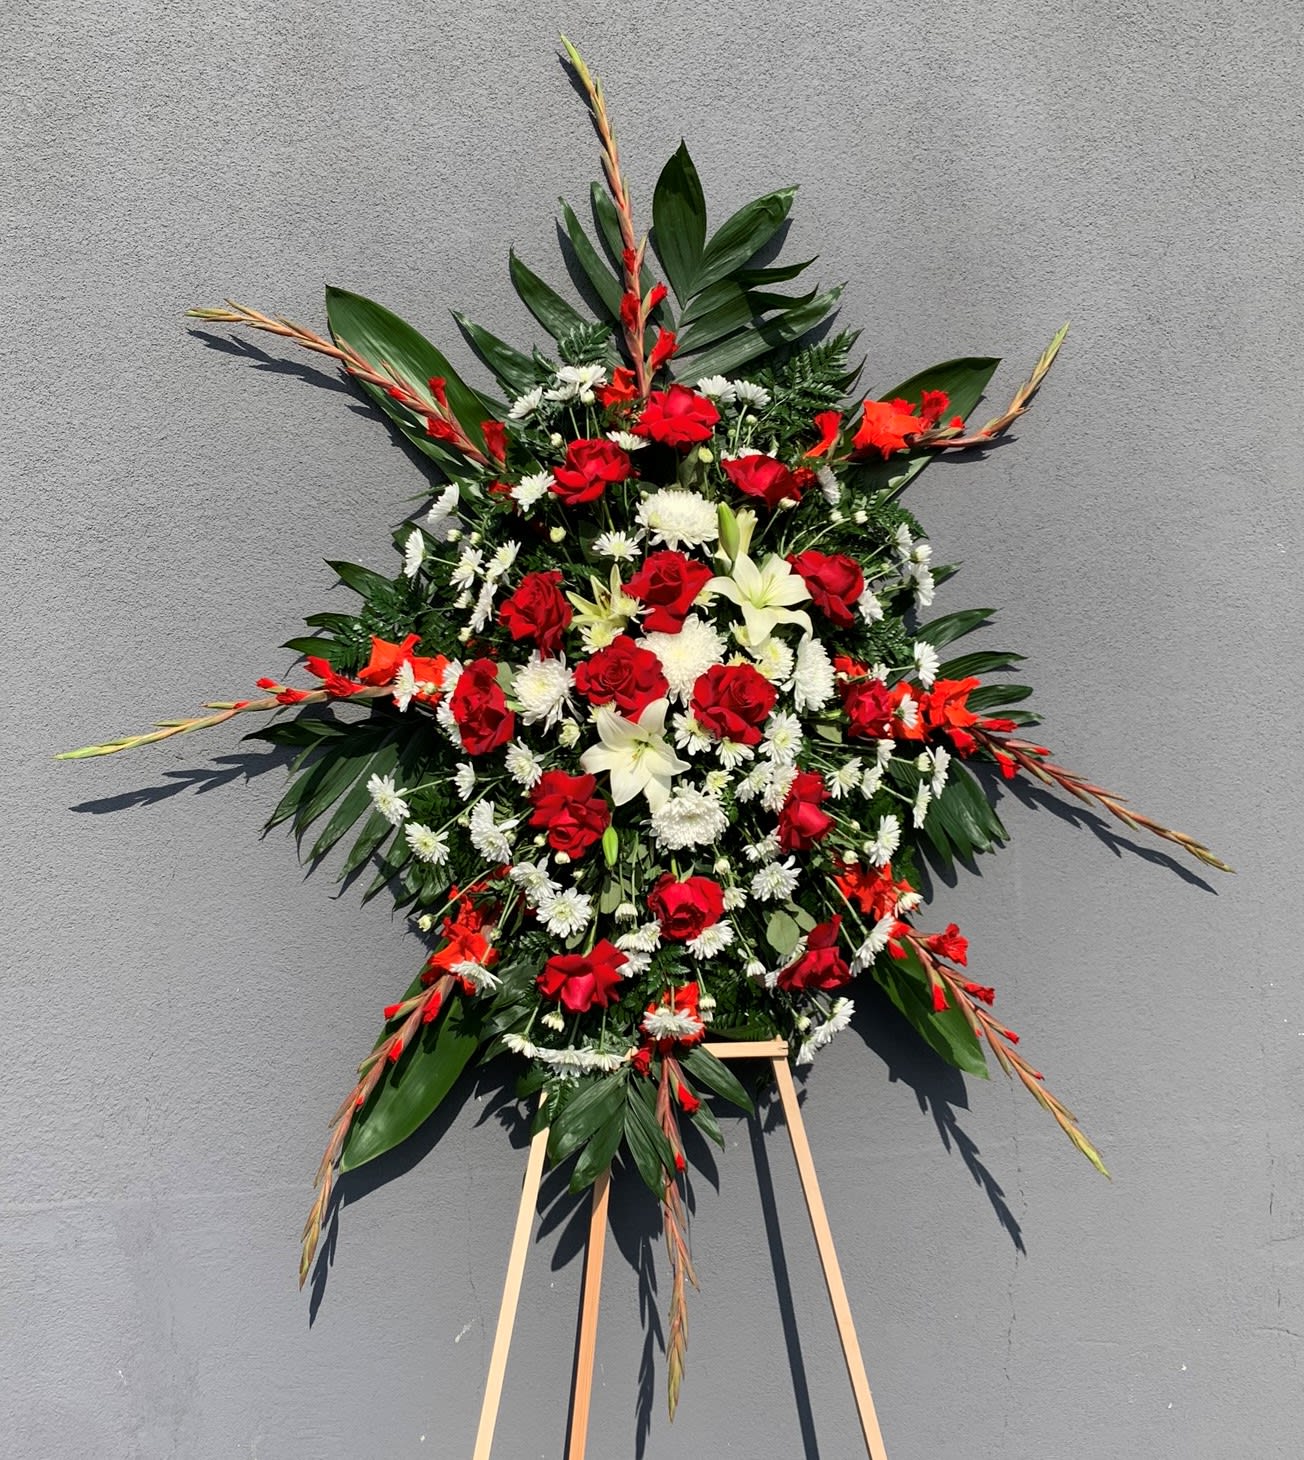 White Funeral Spray  Funeral flower arrangements, Funeral flowers, Funeral  floral arrangements